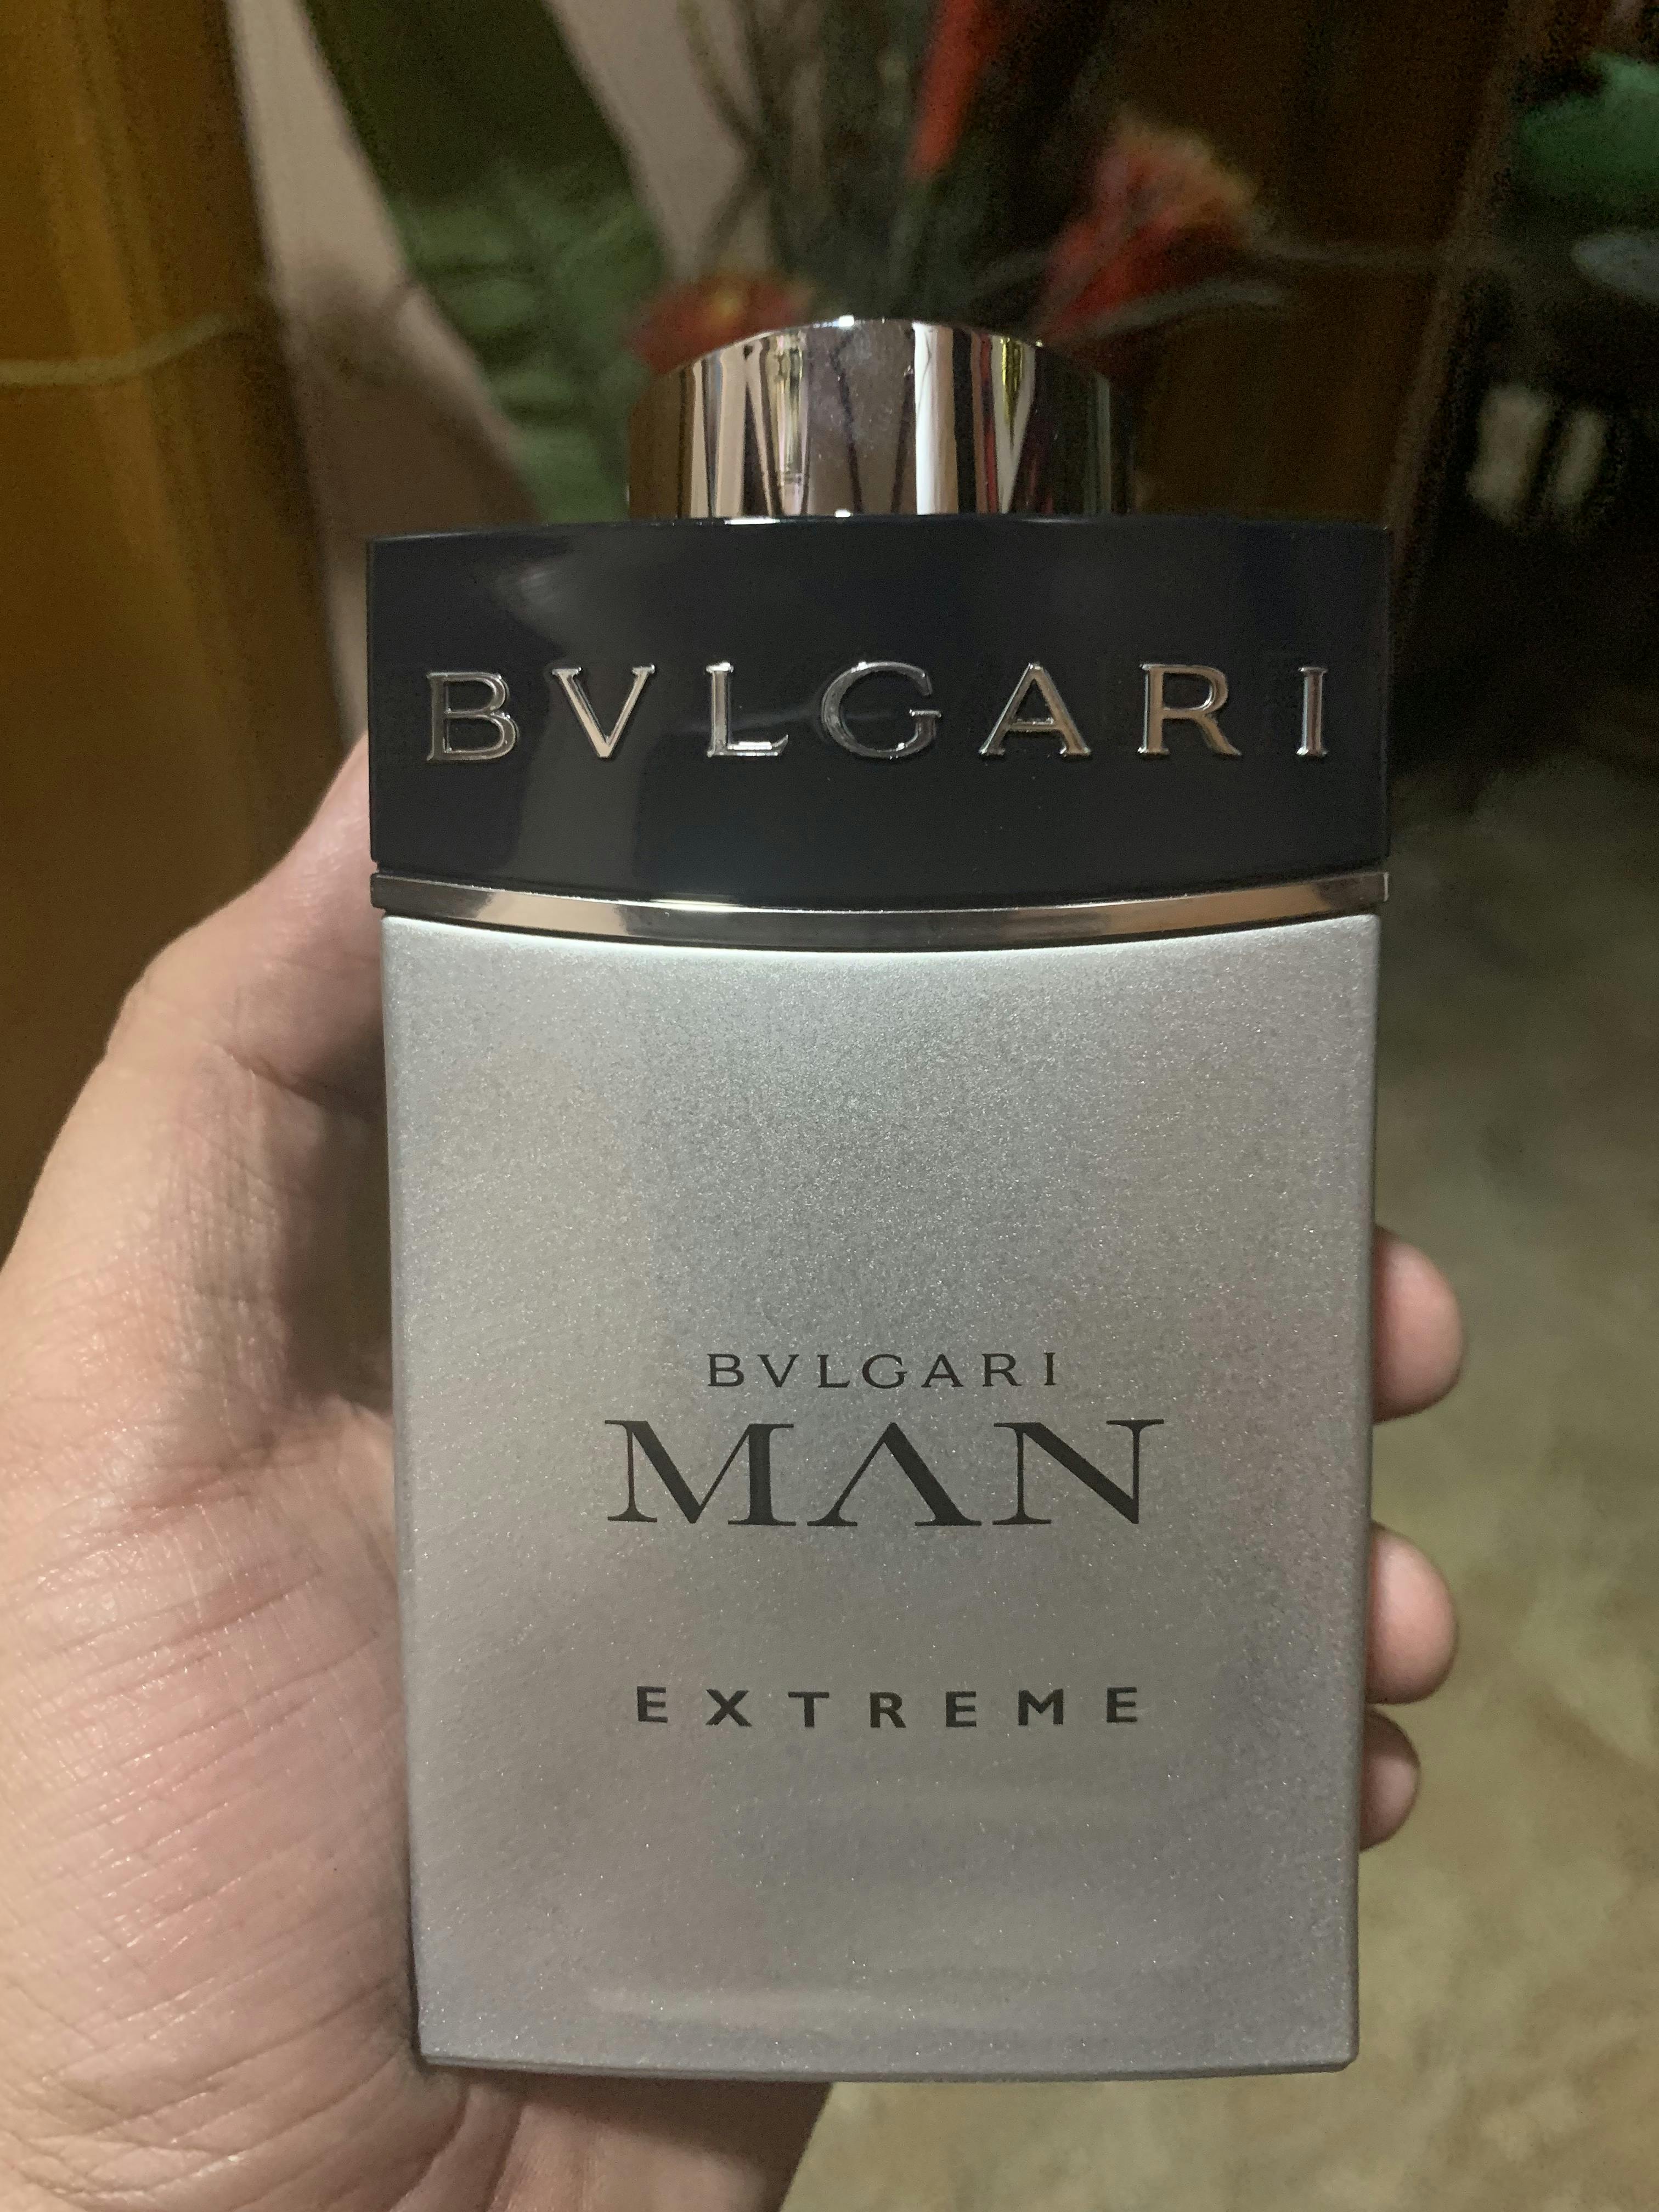 bvlgari extreme price philippines